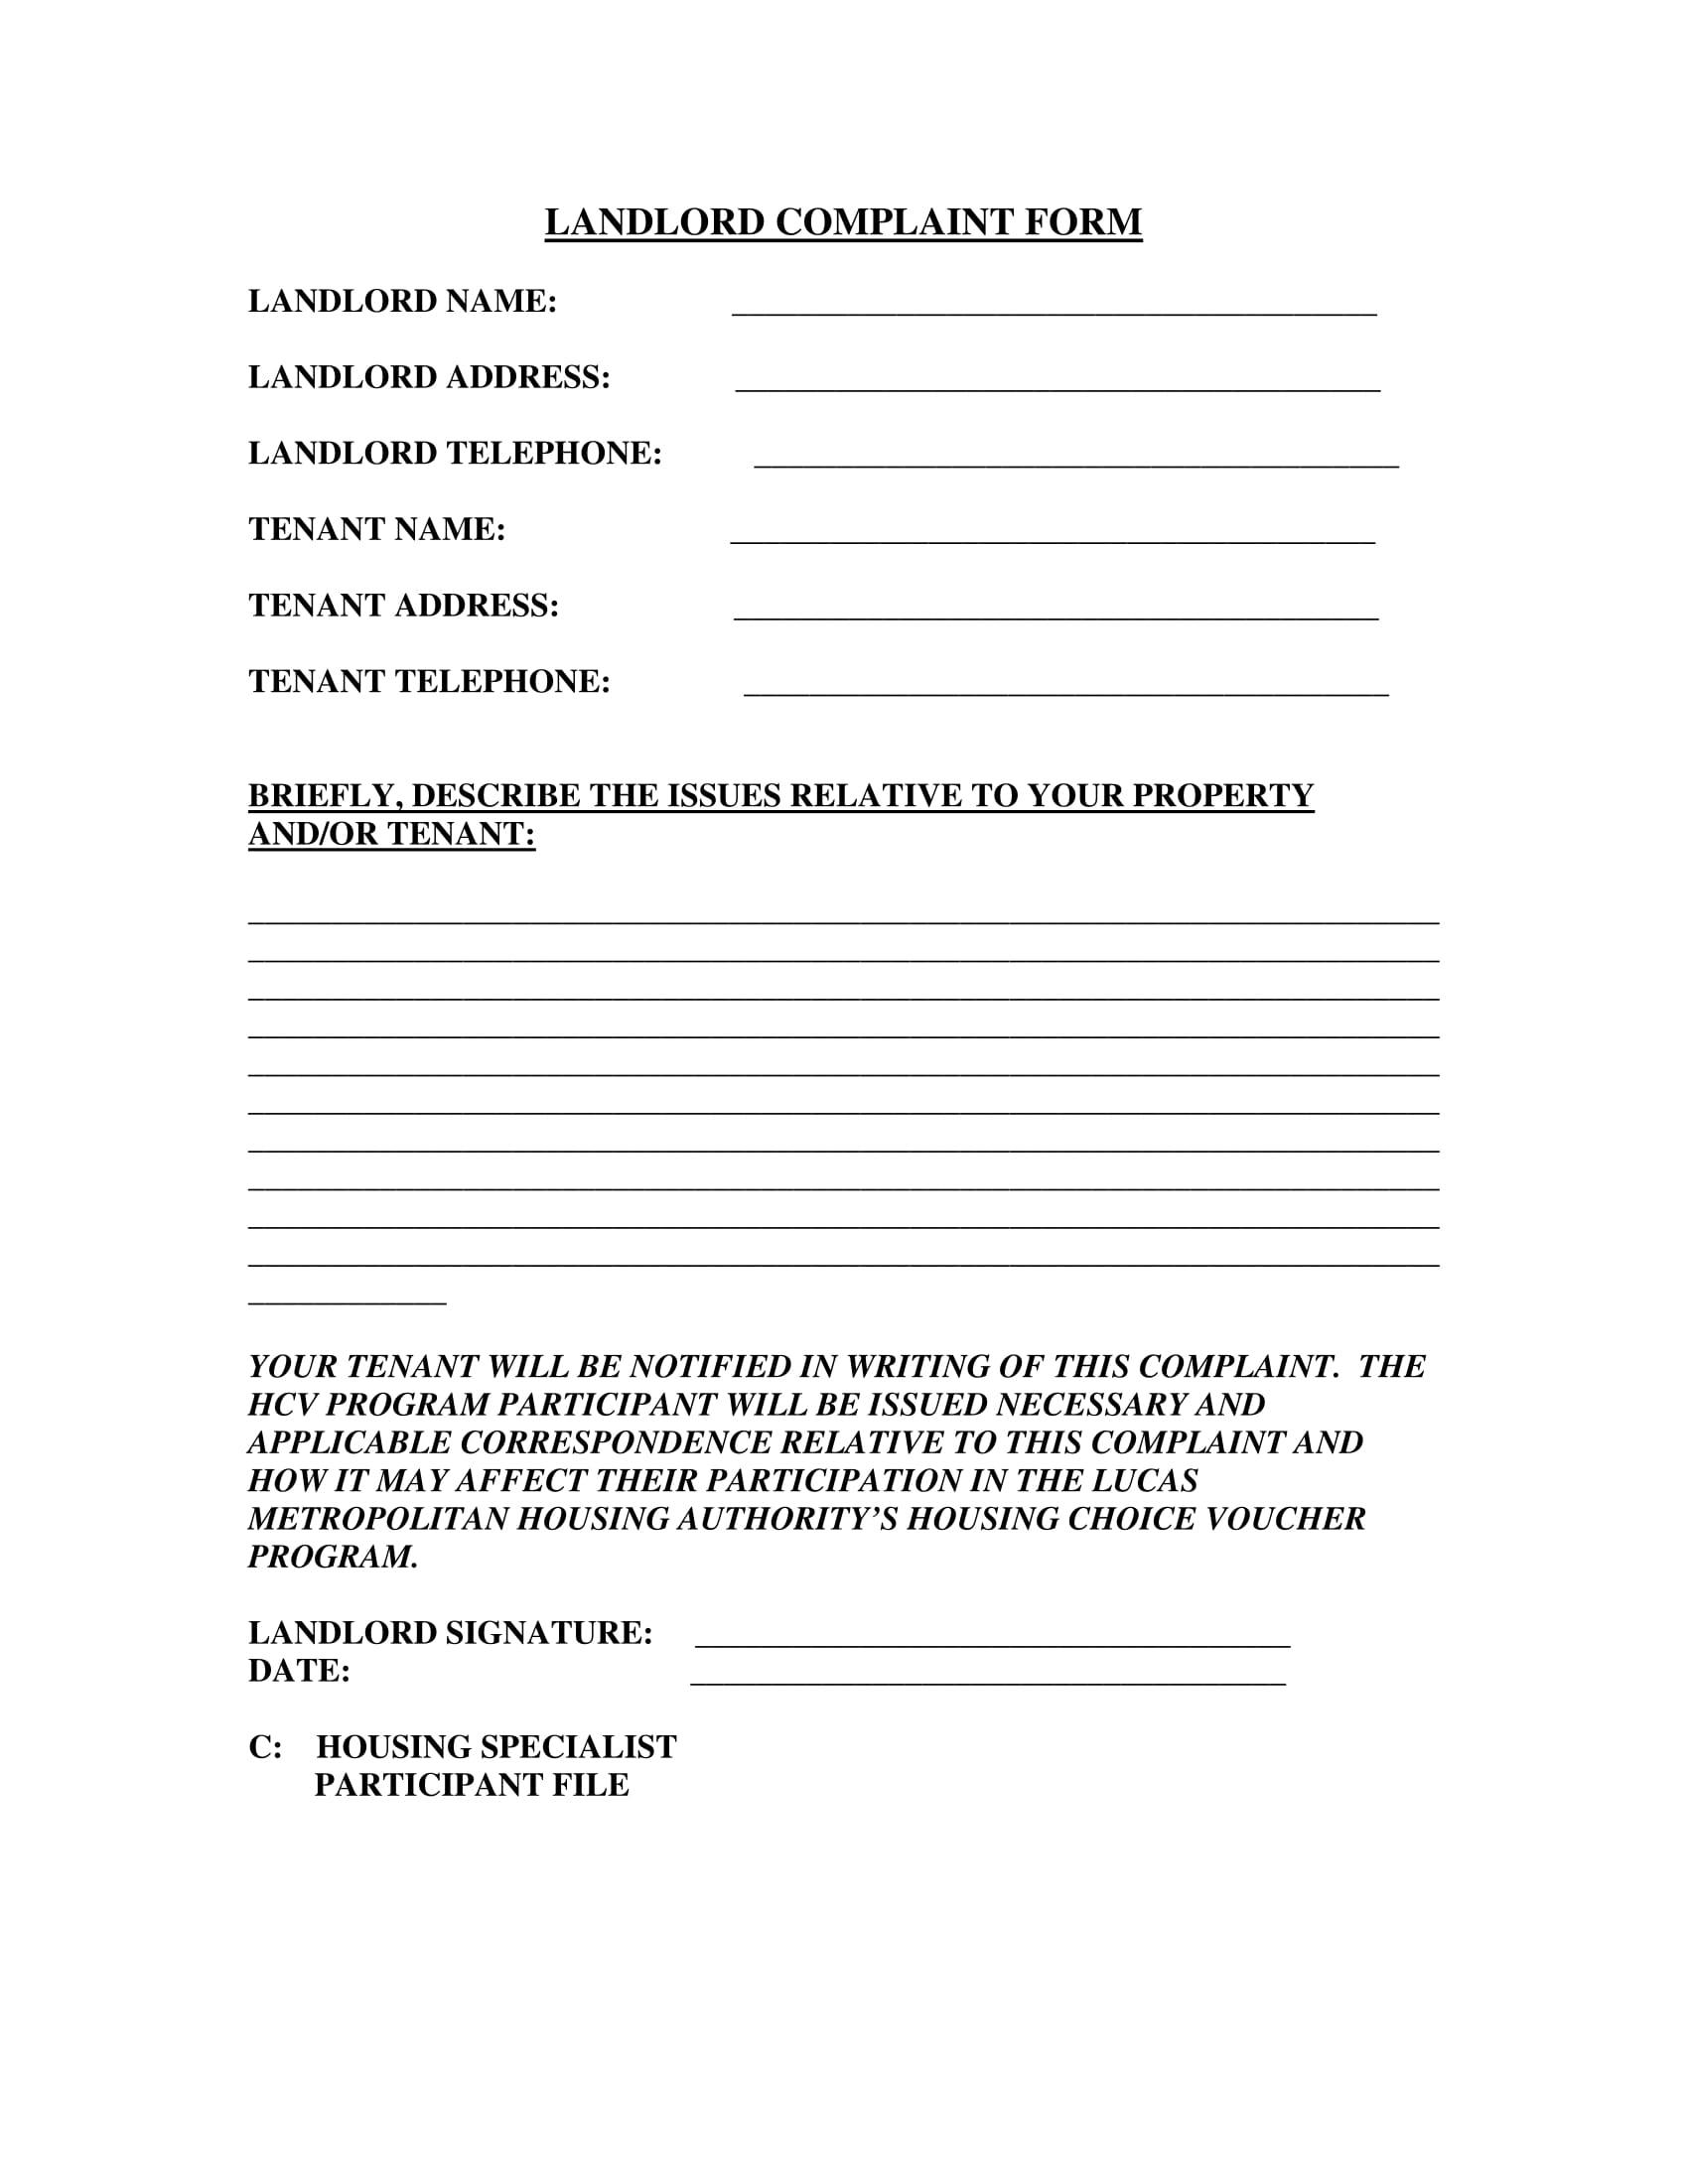 landlord complaint form 1